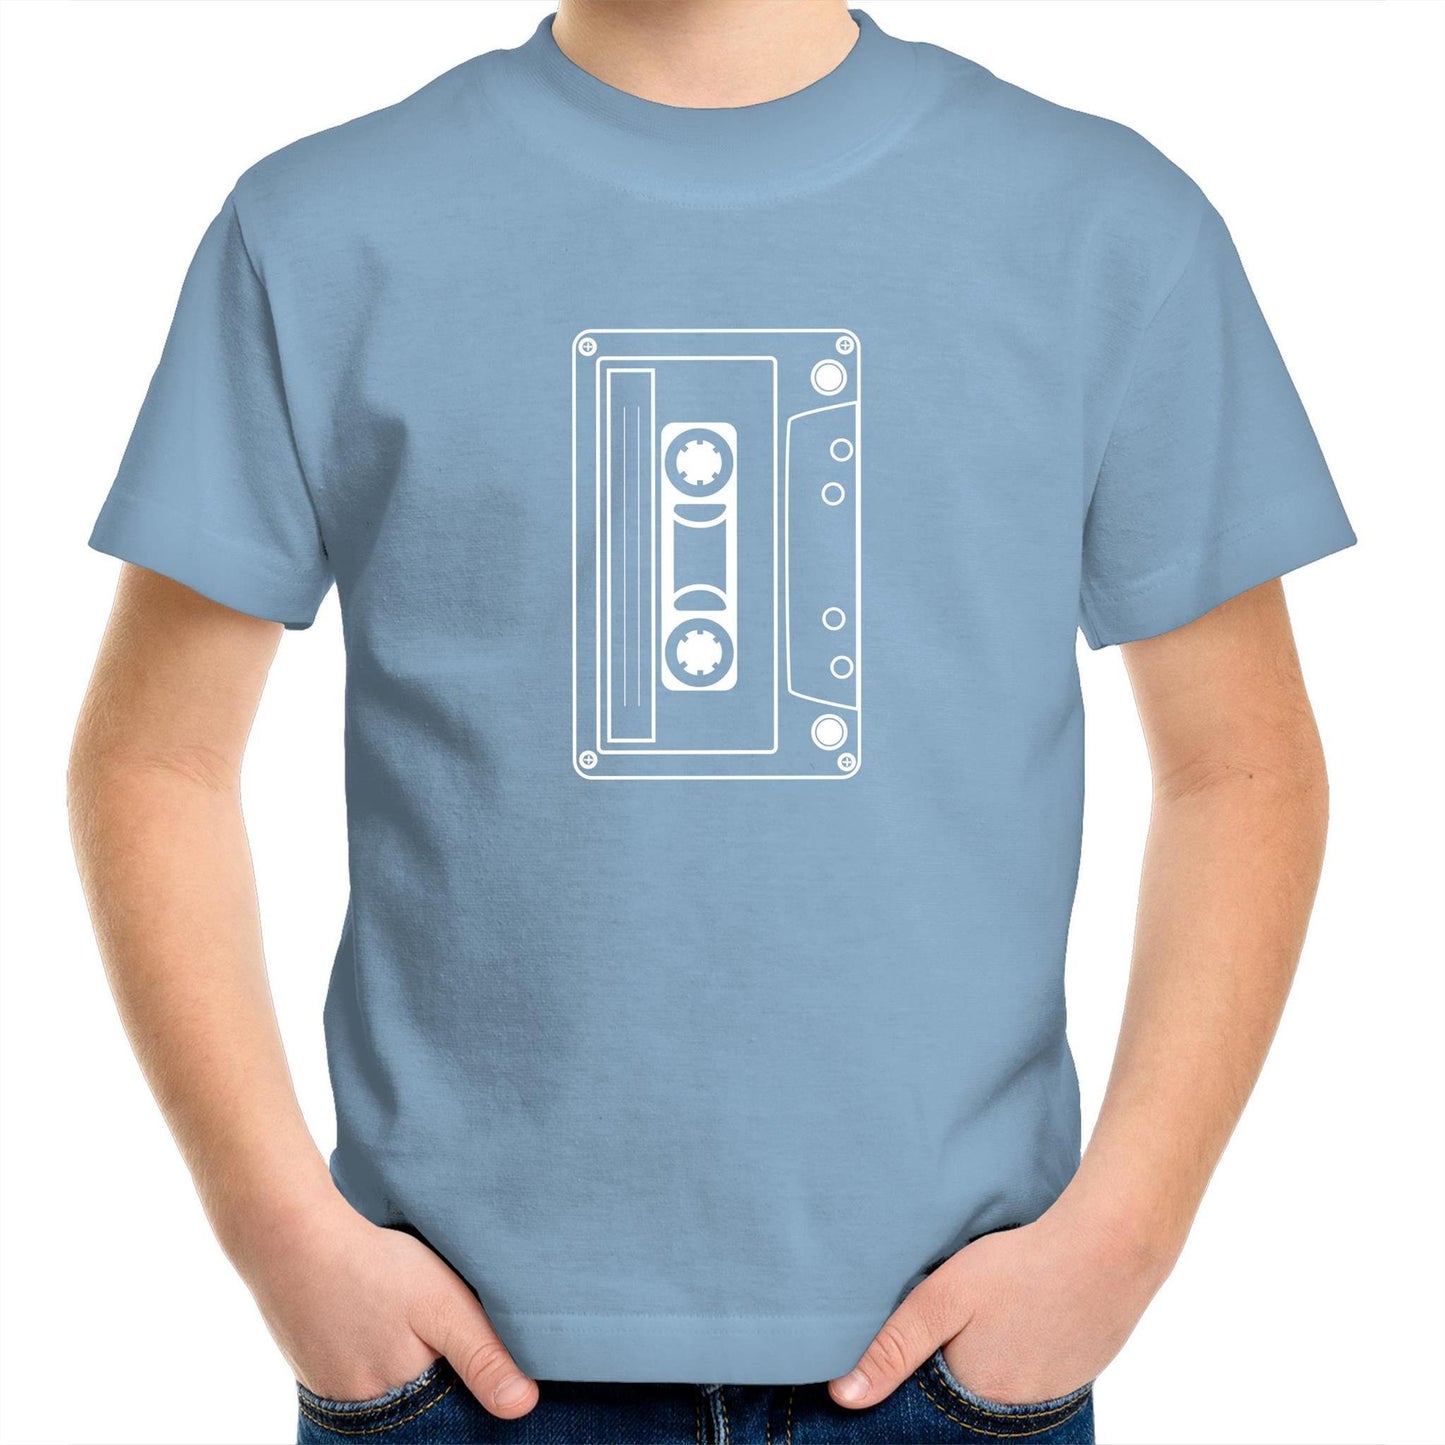 Cassette - Kids Youth Crew T-Shirt Carolina Blue Kids Youth T-shirt Music Retro